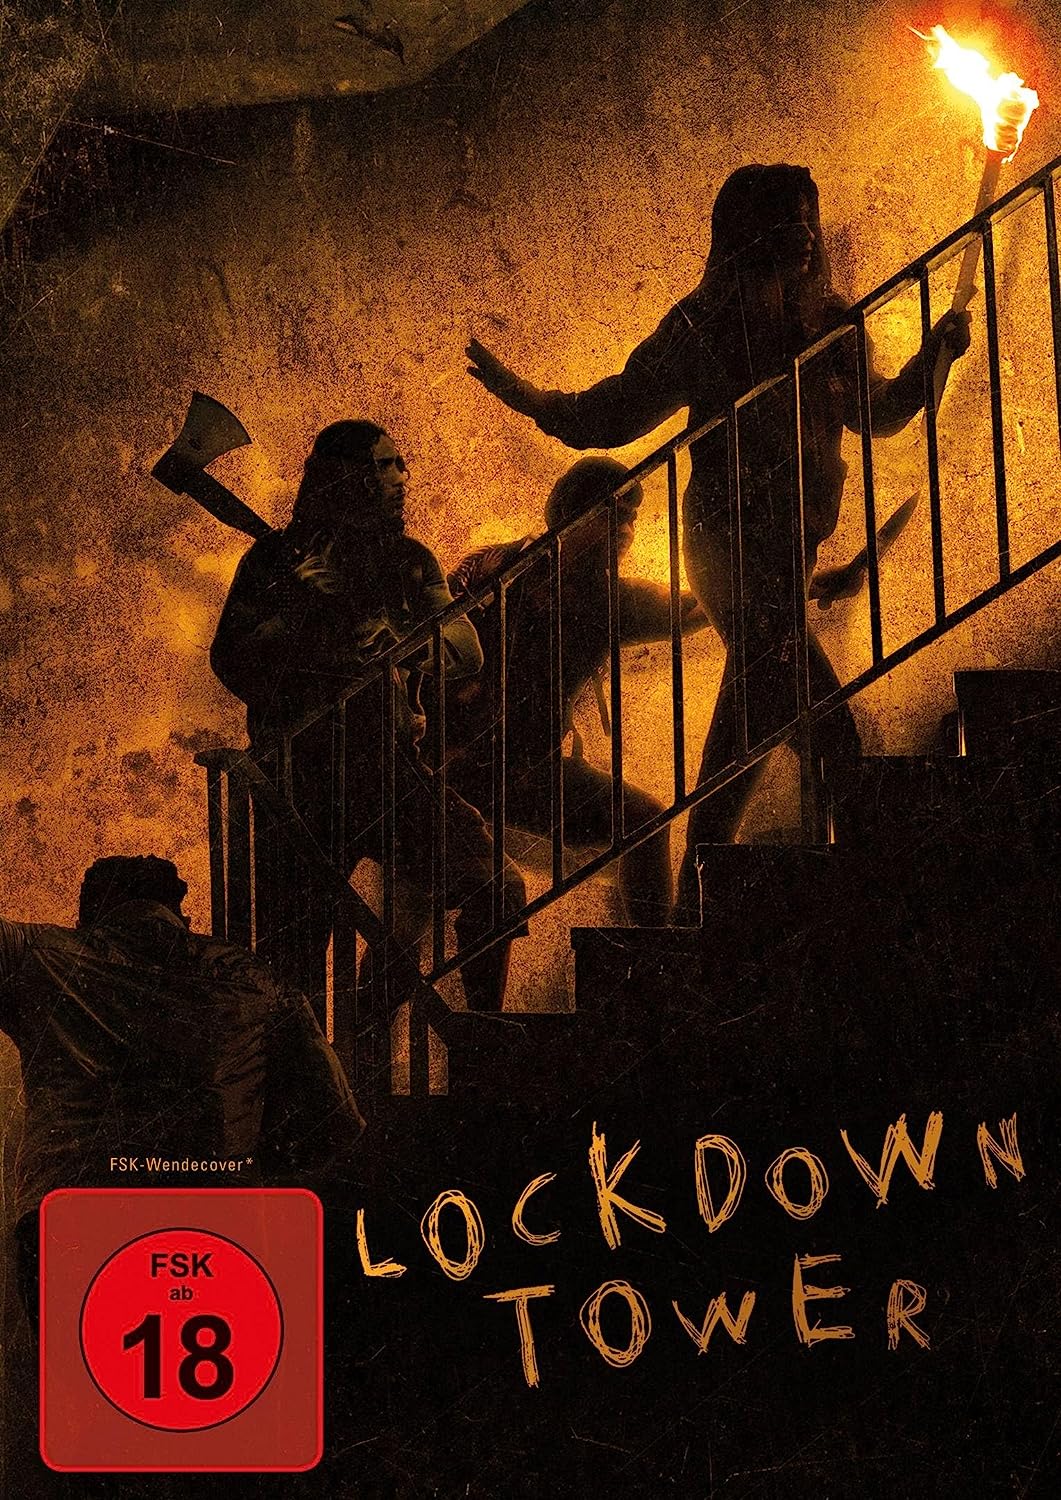 Lockdown Tower - DVD Cover